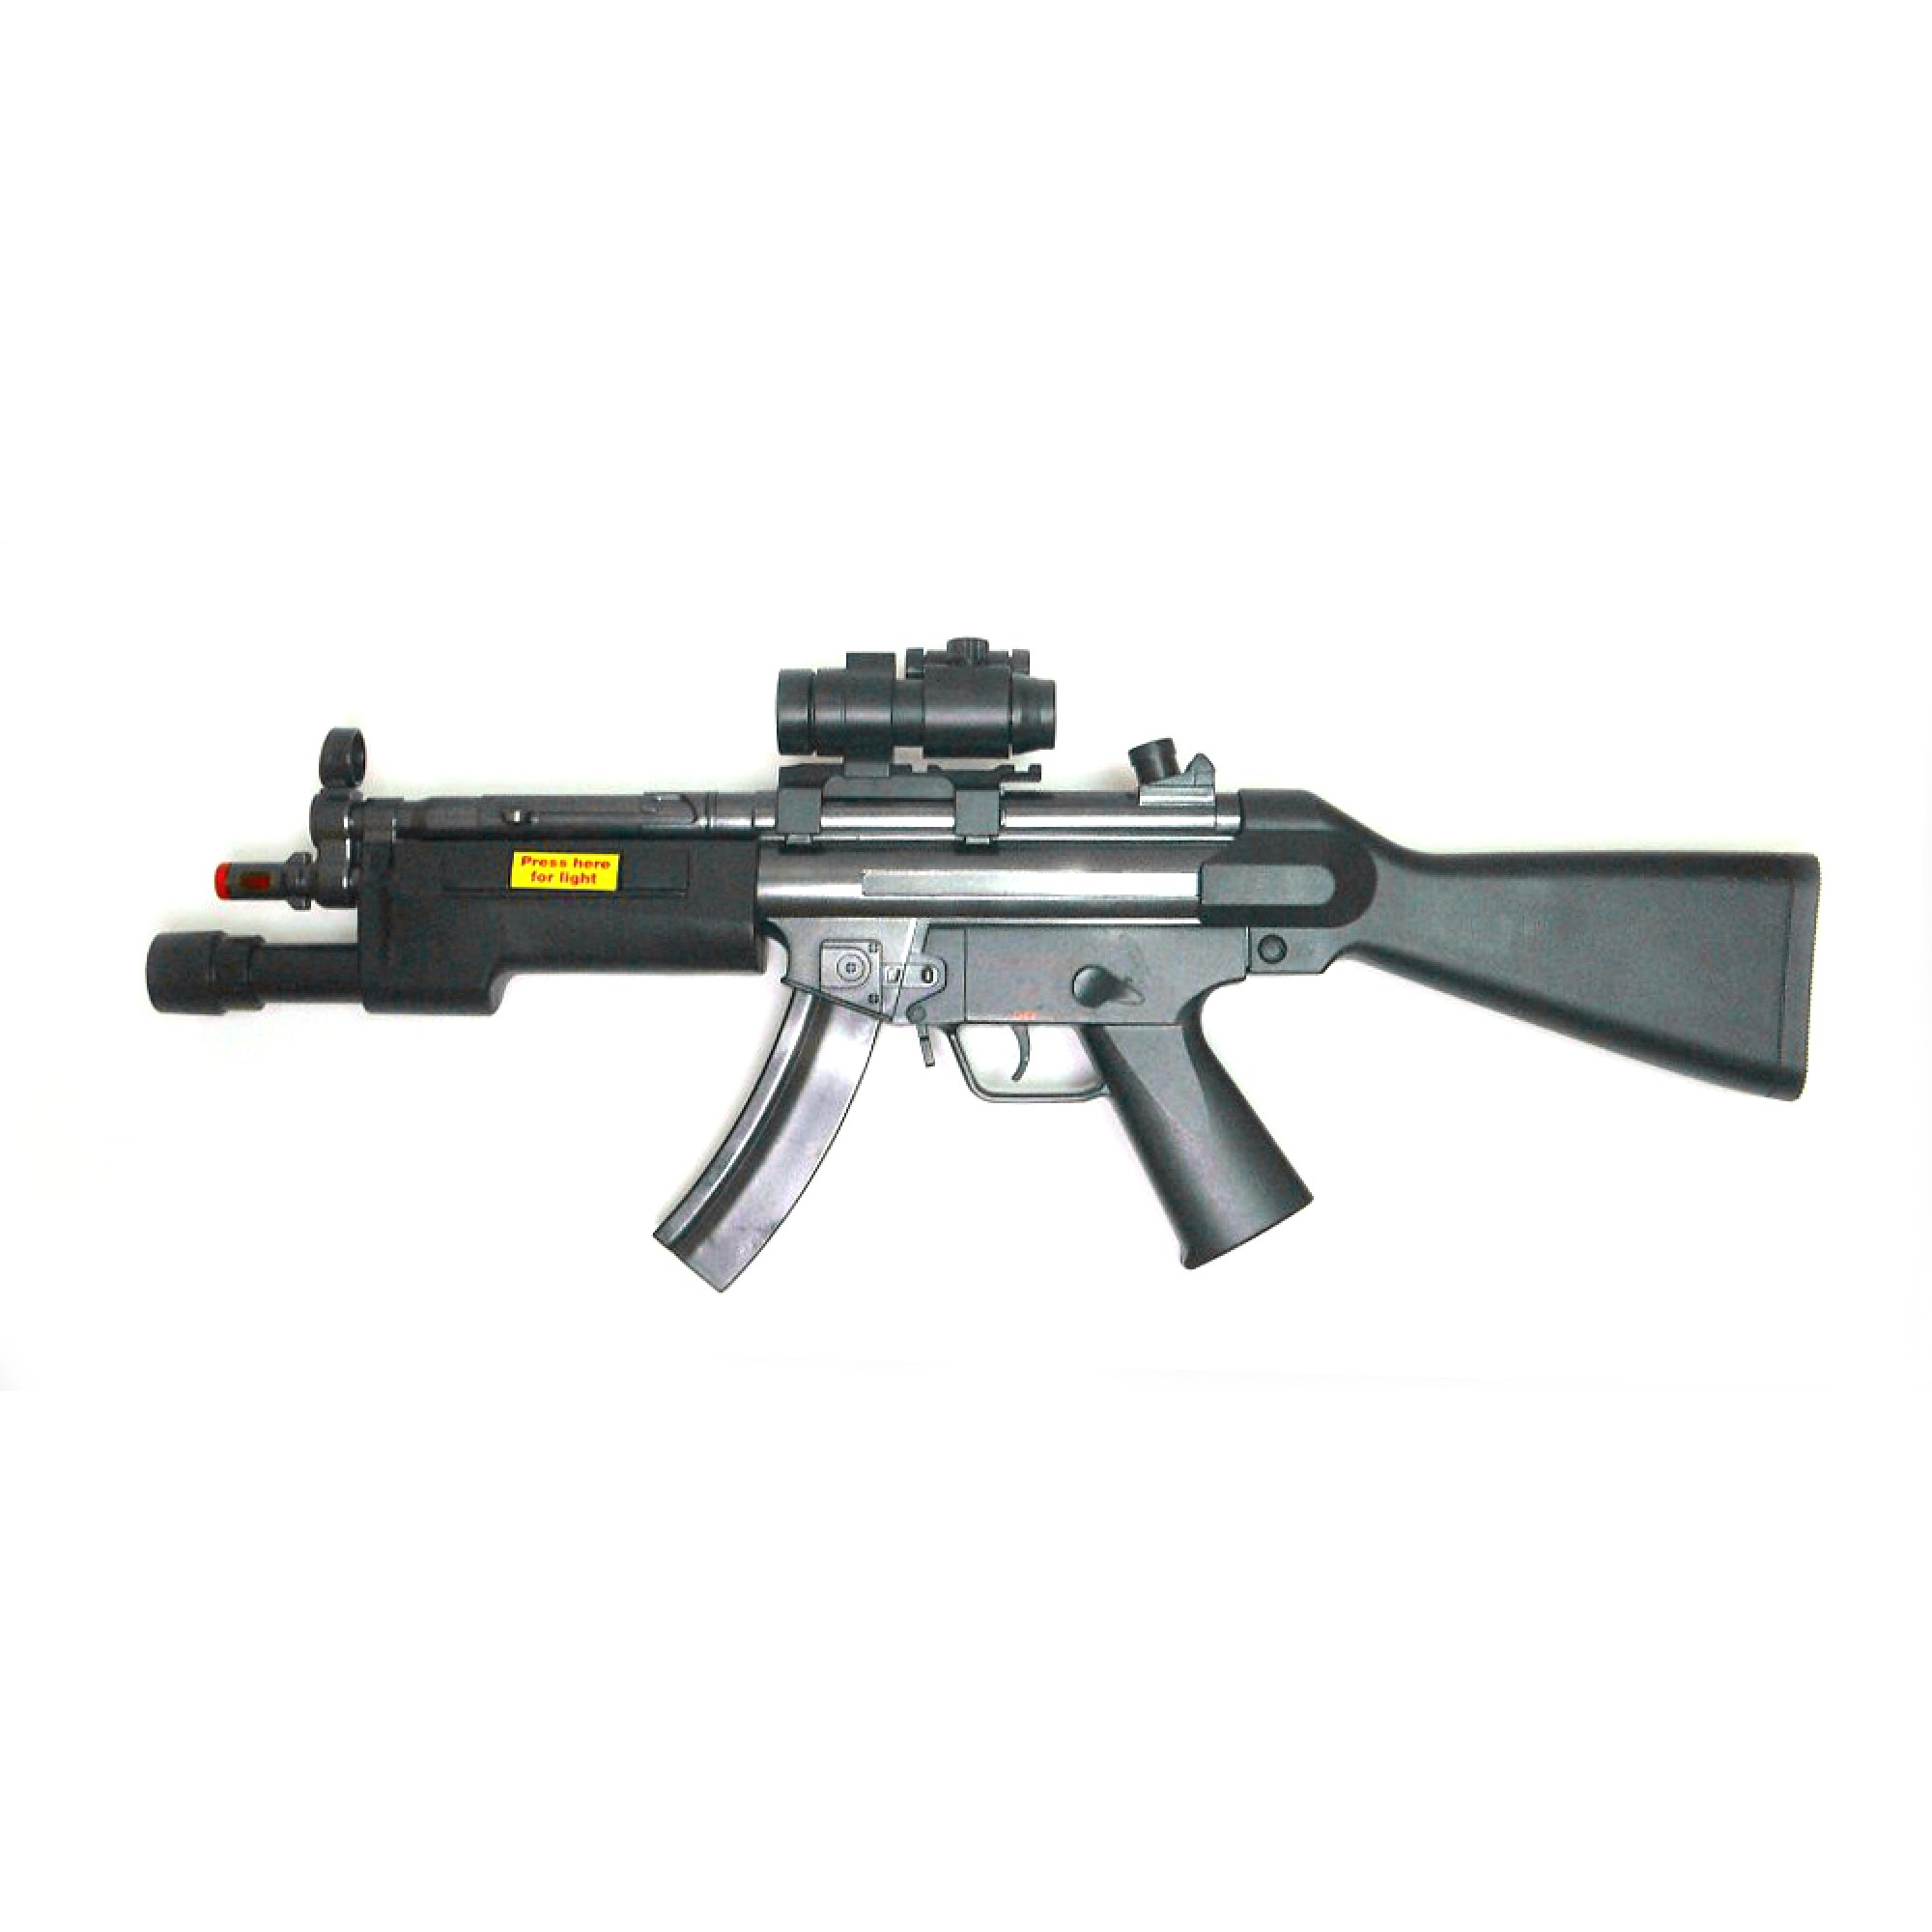 MP5 A4 W/Light, Sound, Vibration & Viewer